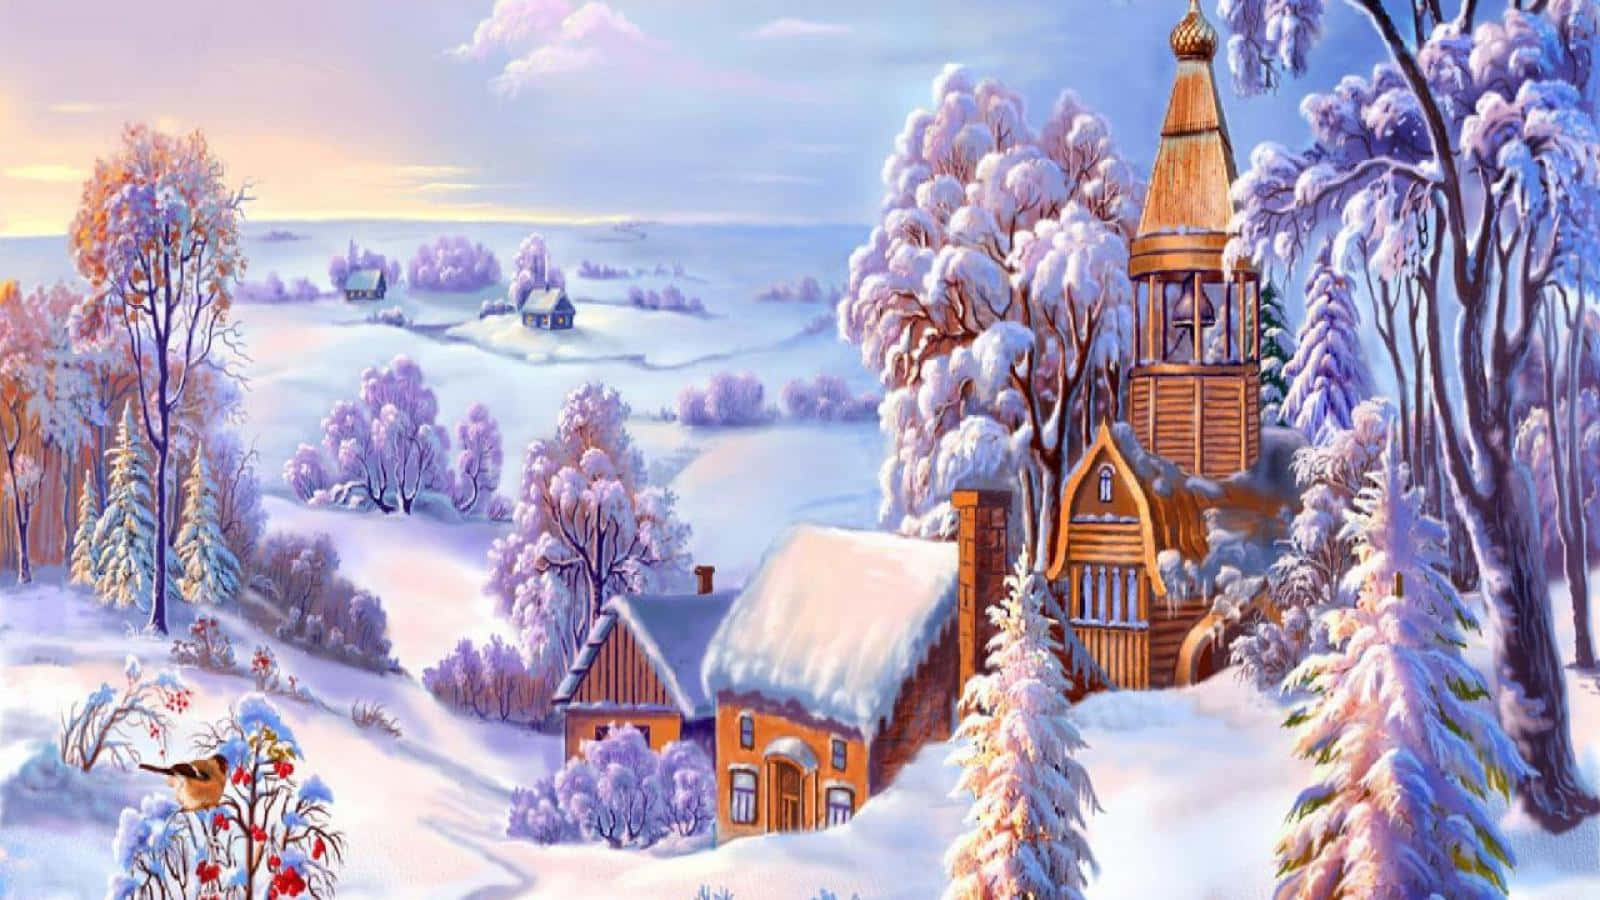 Go on an Adventure through Christmas Winter Wonderland Wallpaper